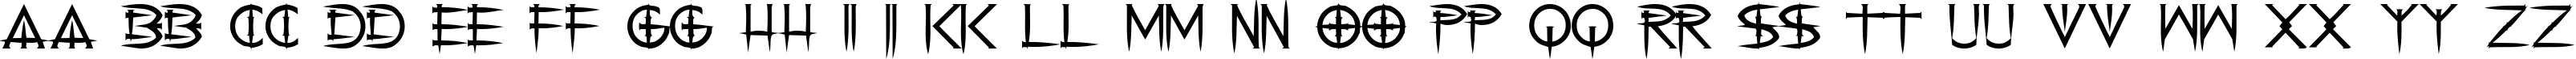 Пример написания английского алфавита шрифтом Cenobyte